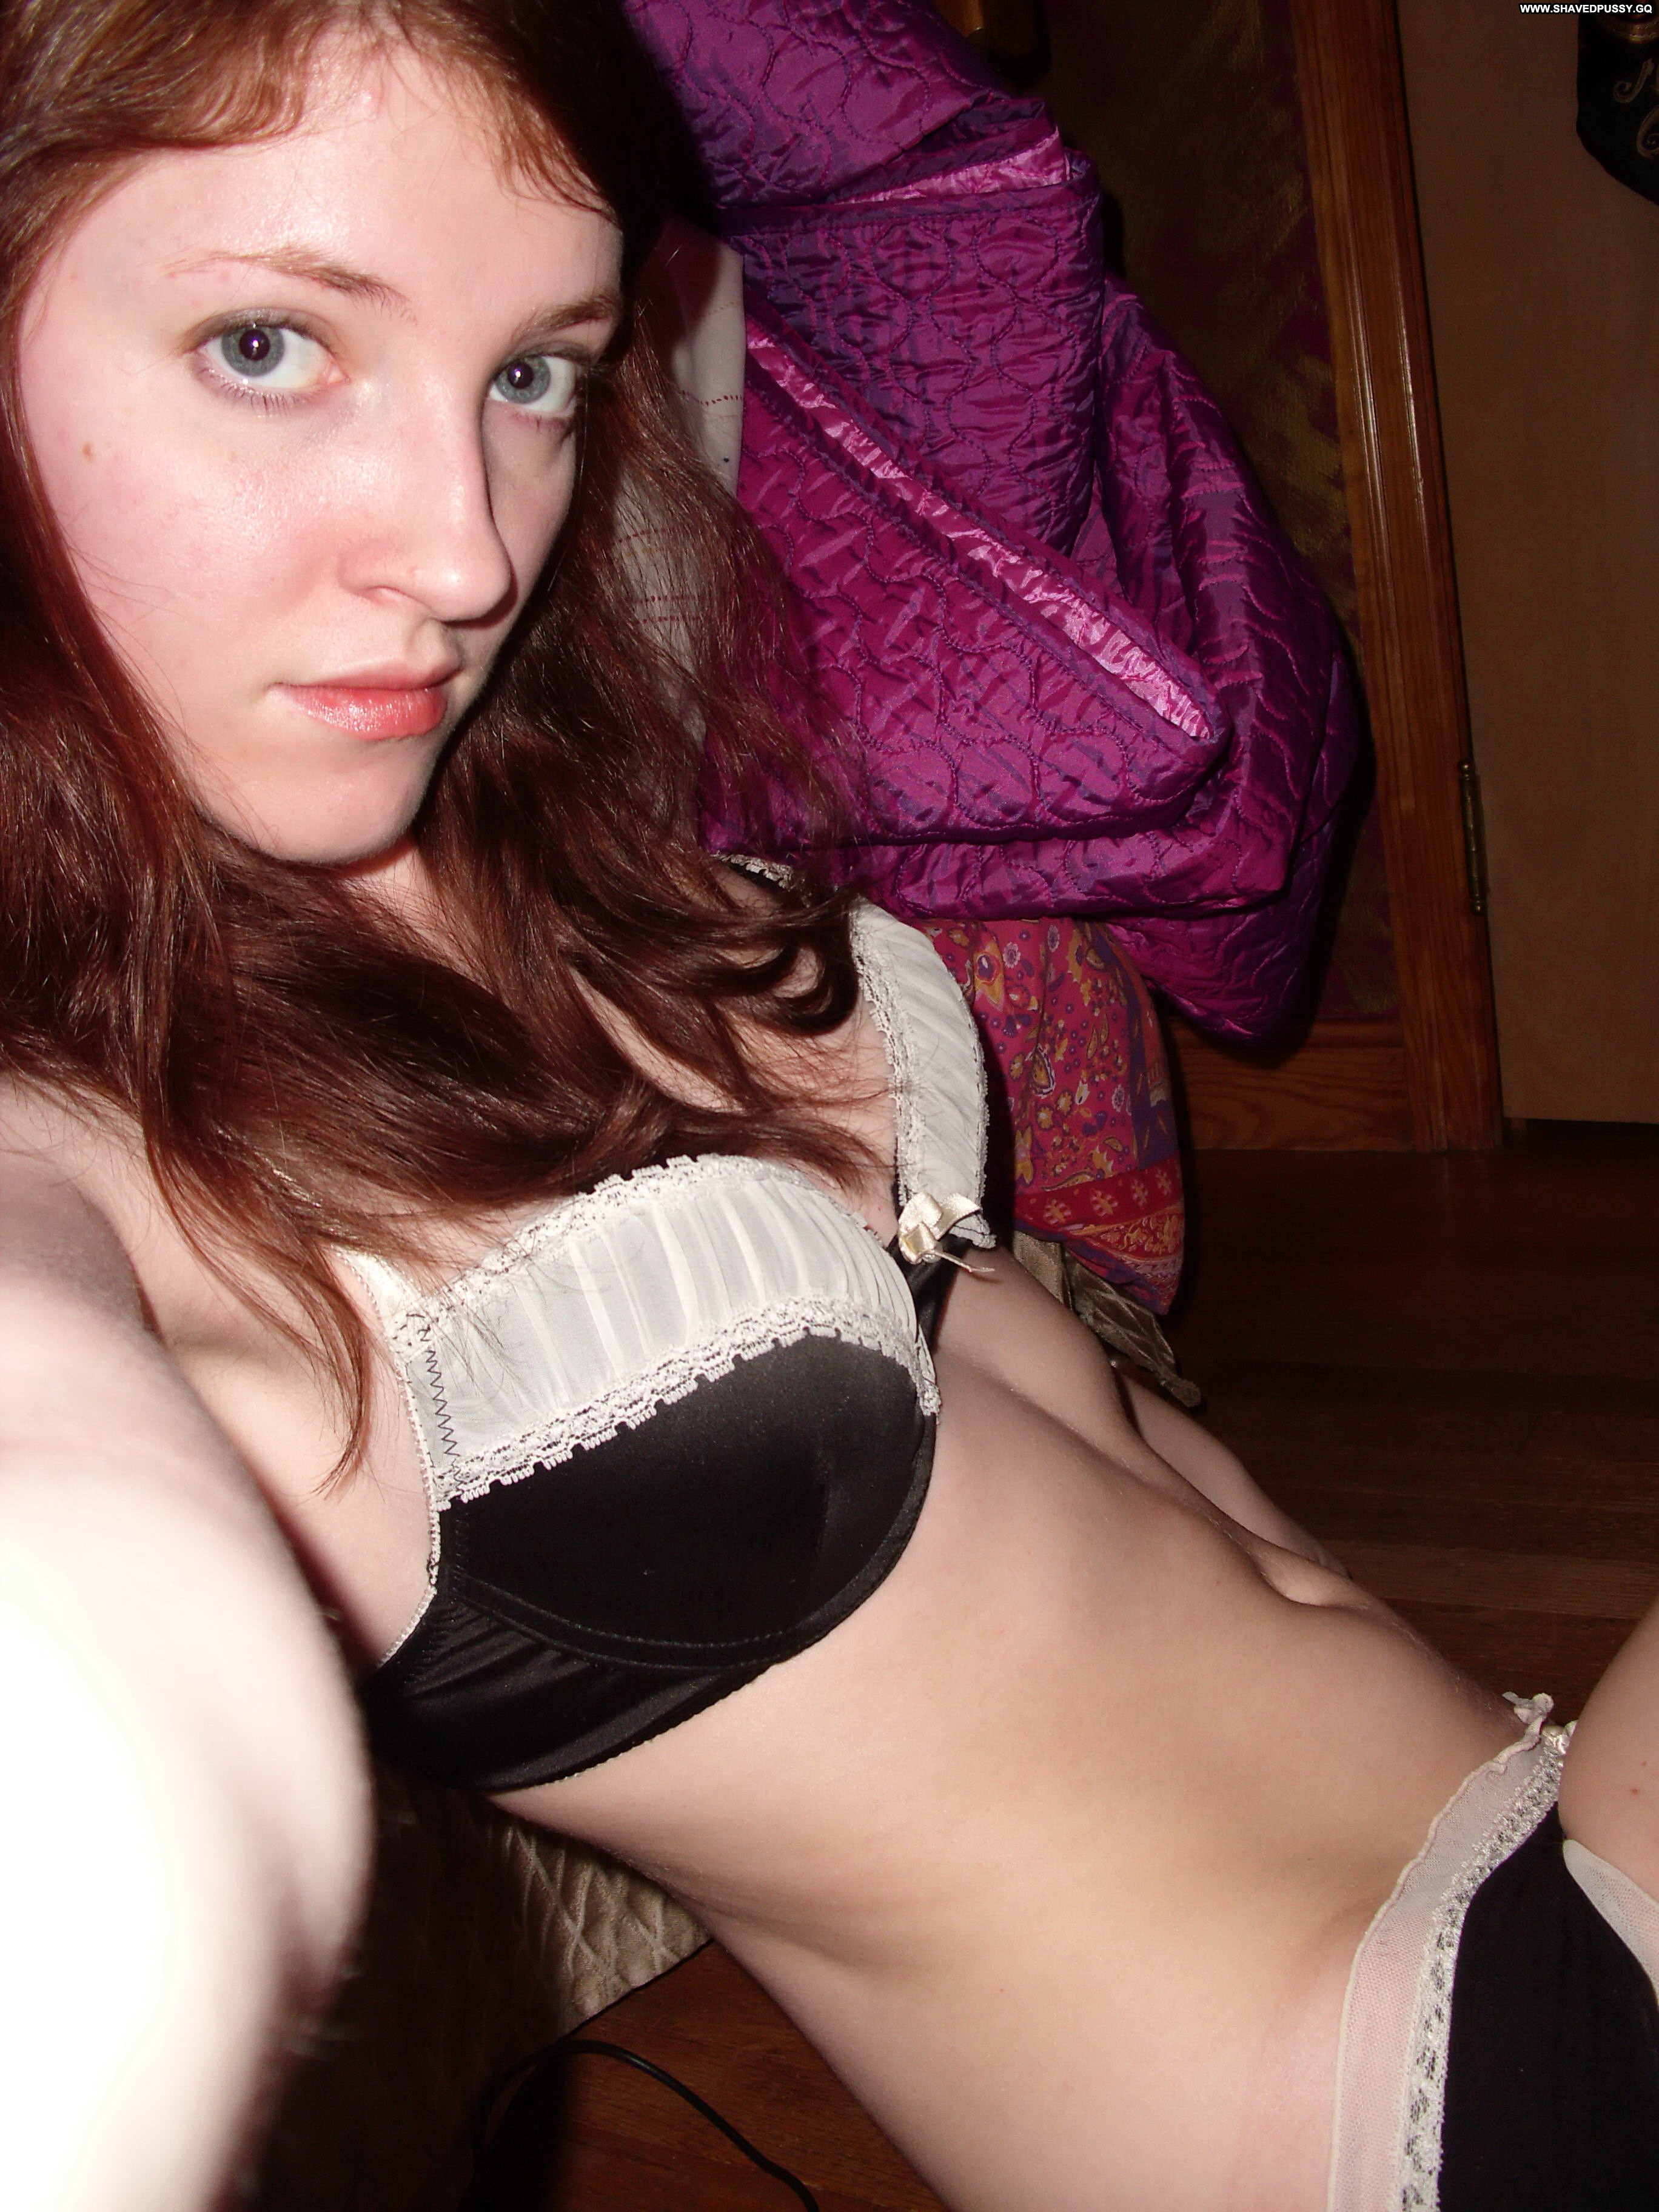 best voyeur bra and panties pics Adult Pictures